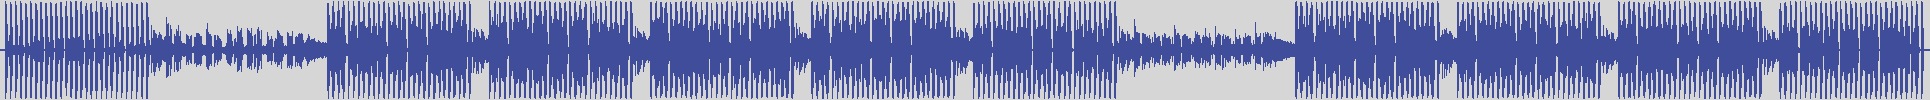 nf_boyz_records [NFY002] Markus Monson - Deep Condensation [Mandragora's Mix] audio wave form